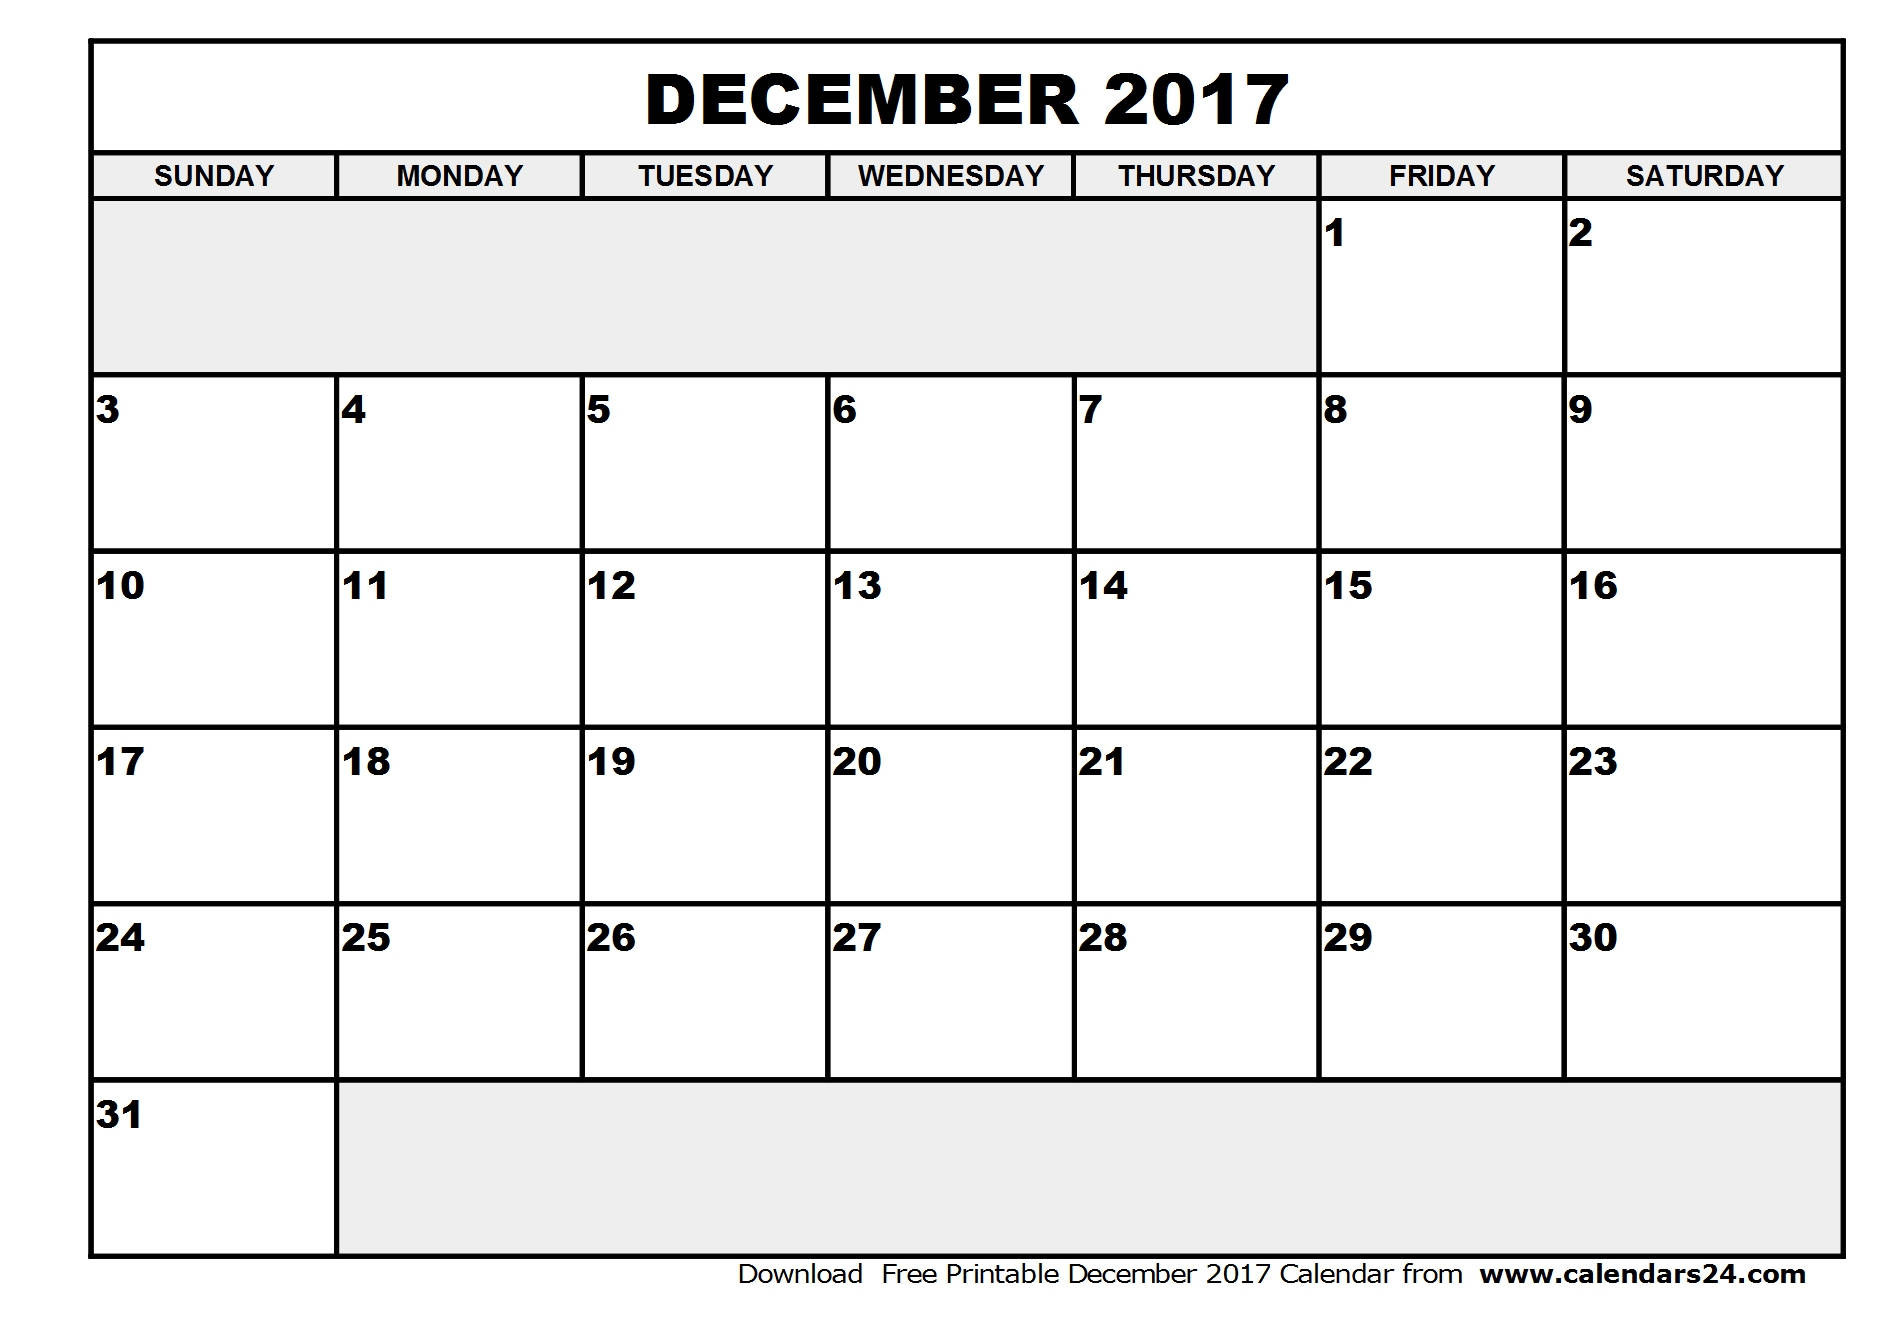 December 2017 Calendar & January 2017 Calendar